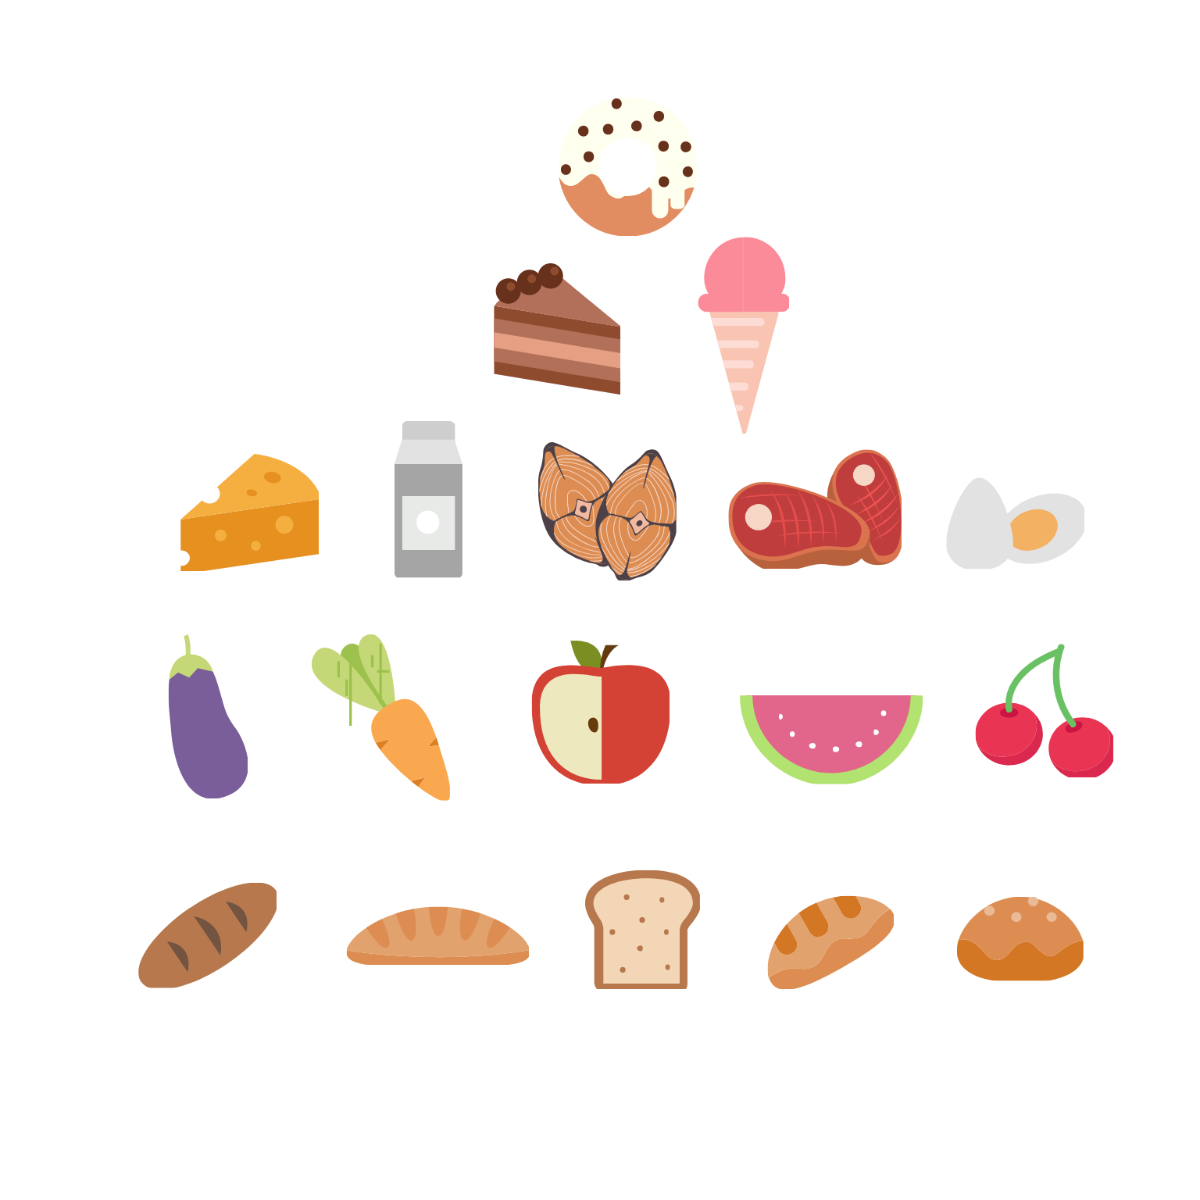 Food Pyramid Vector Template